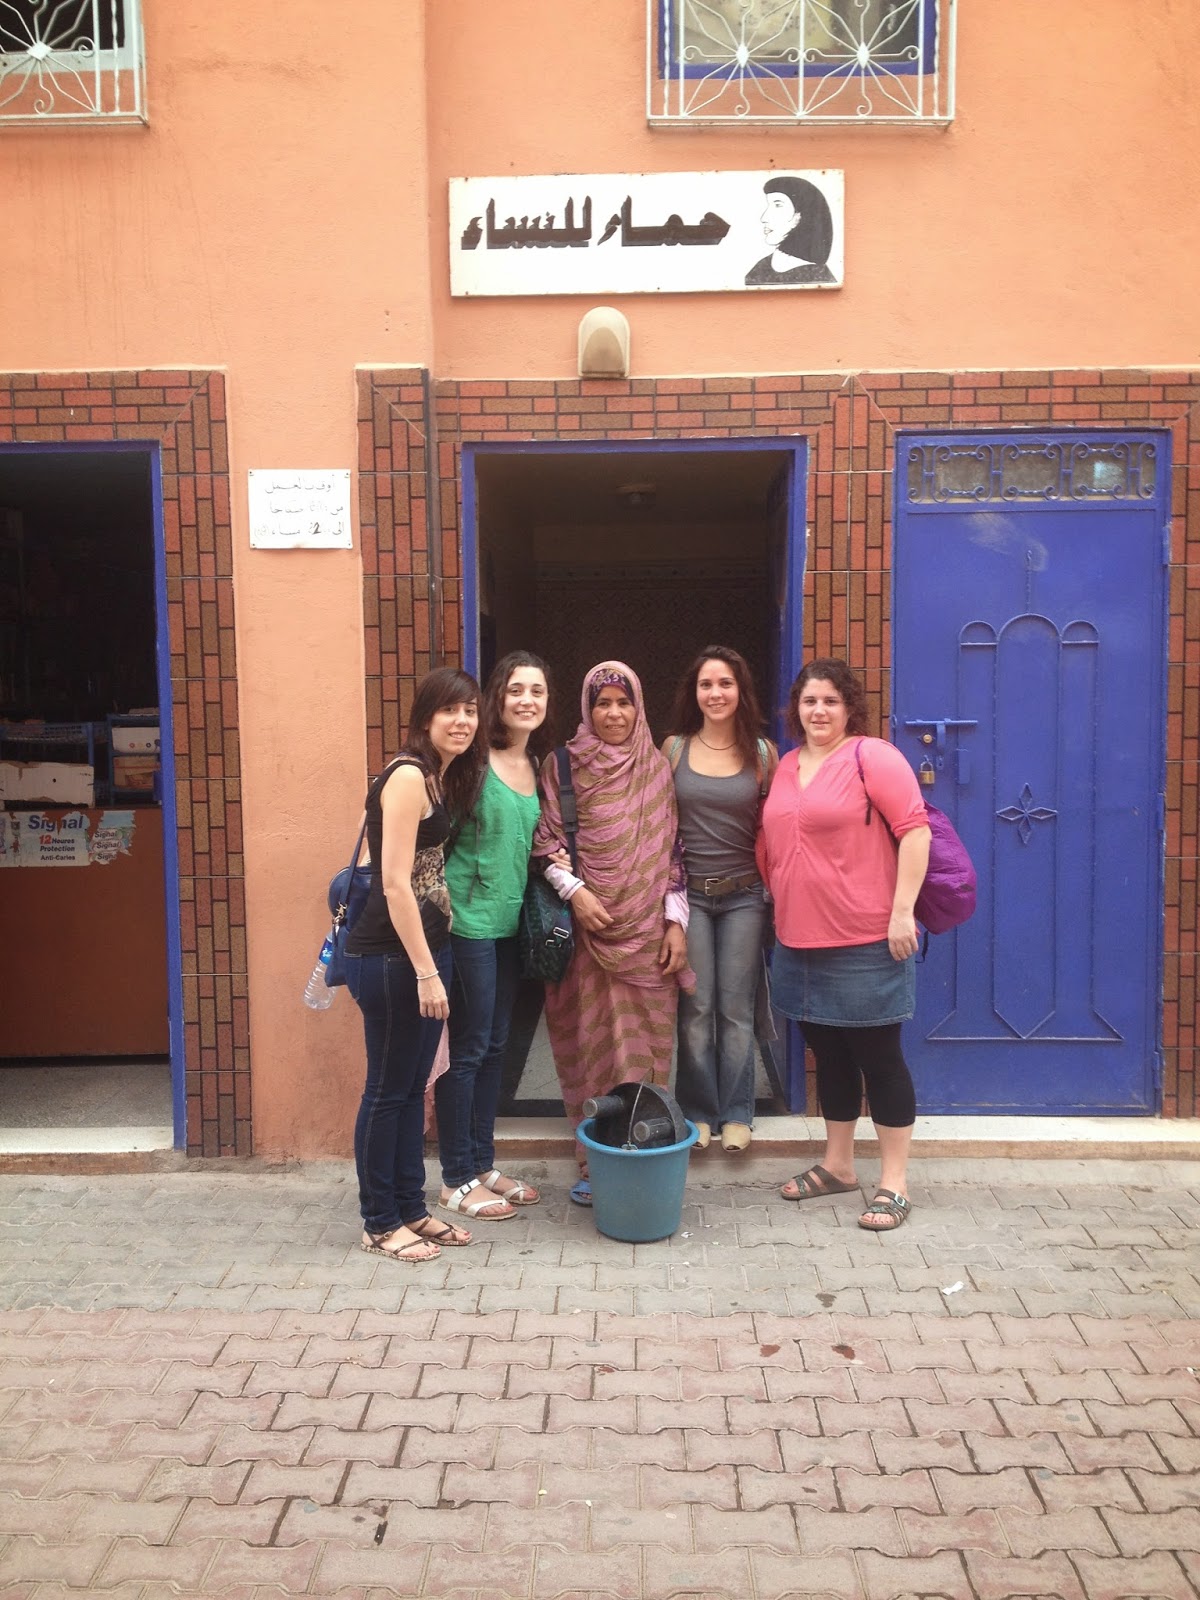 Ruta de 6 días por el sur de Marruecos - Blogs de Marruecos - De Marrakech a Chegaga (13)